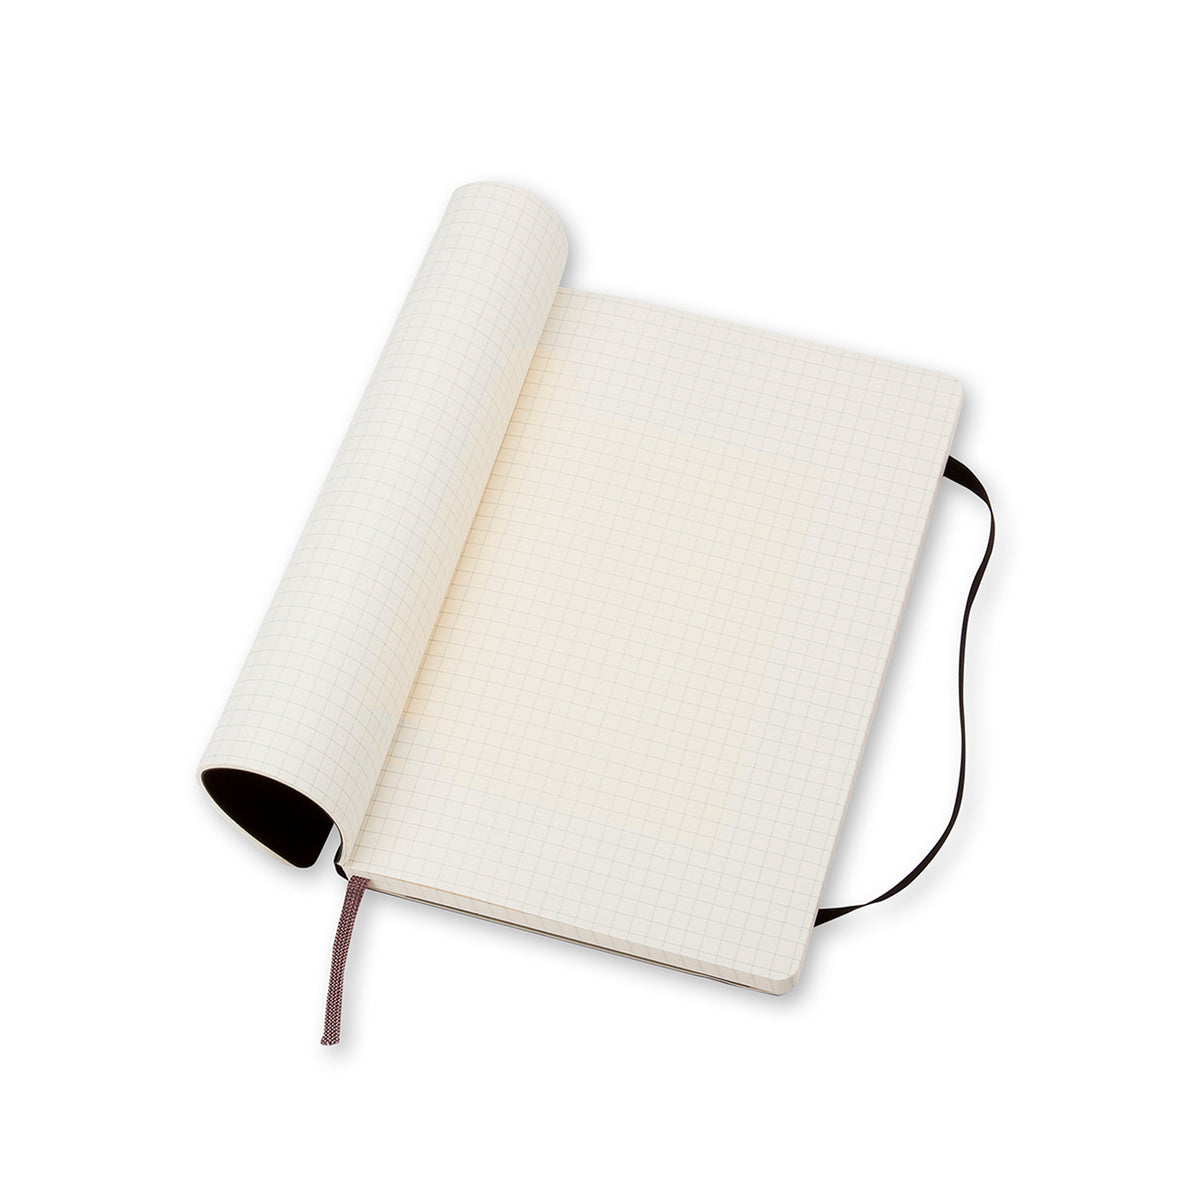 Moleskine - Classic Soft Cover Notebook - Grid - Large - Black